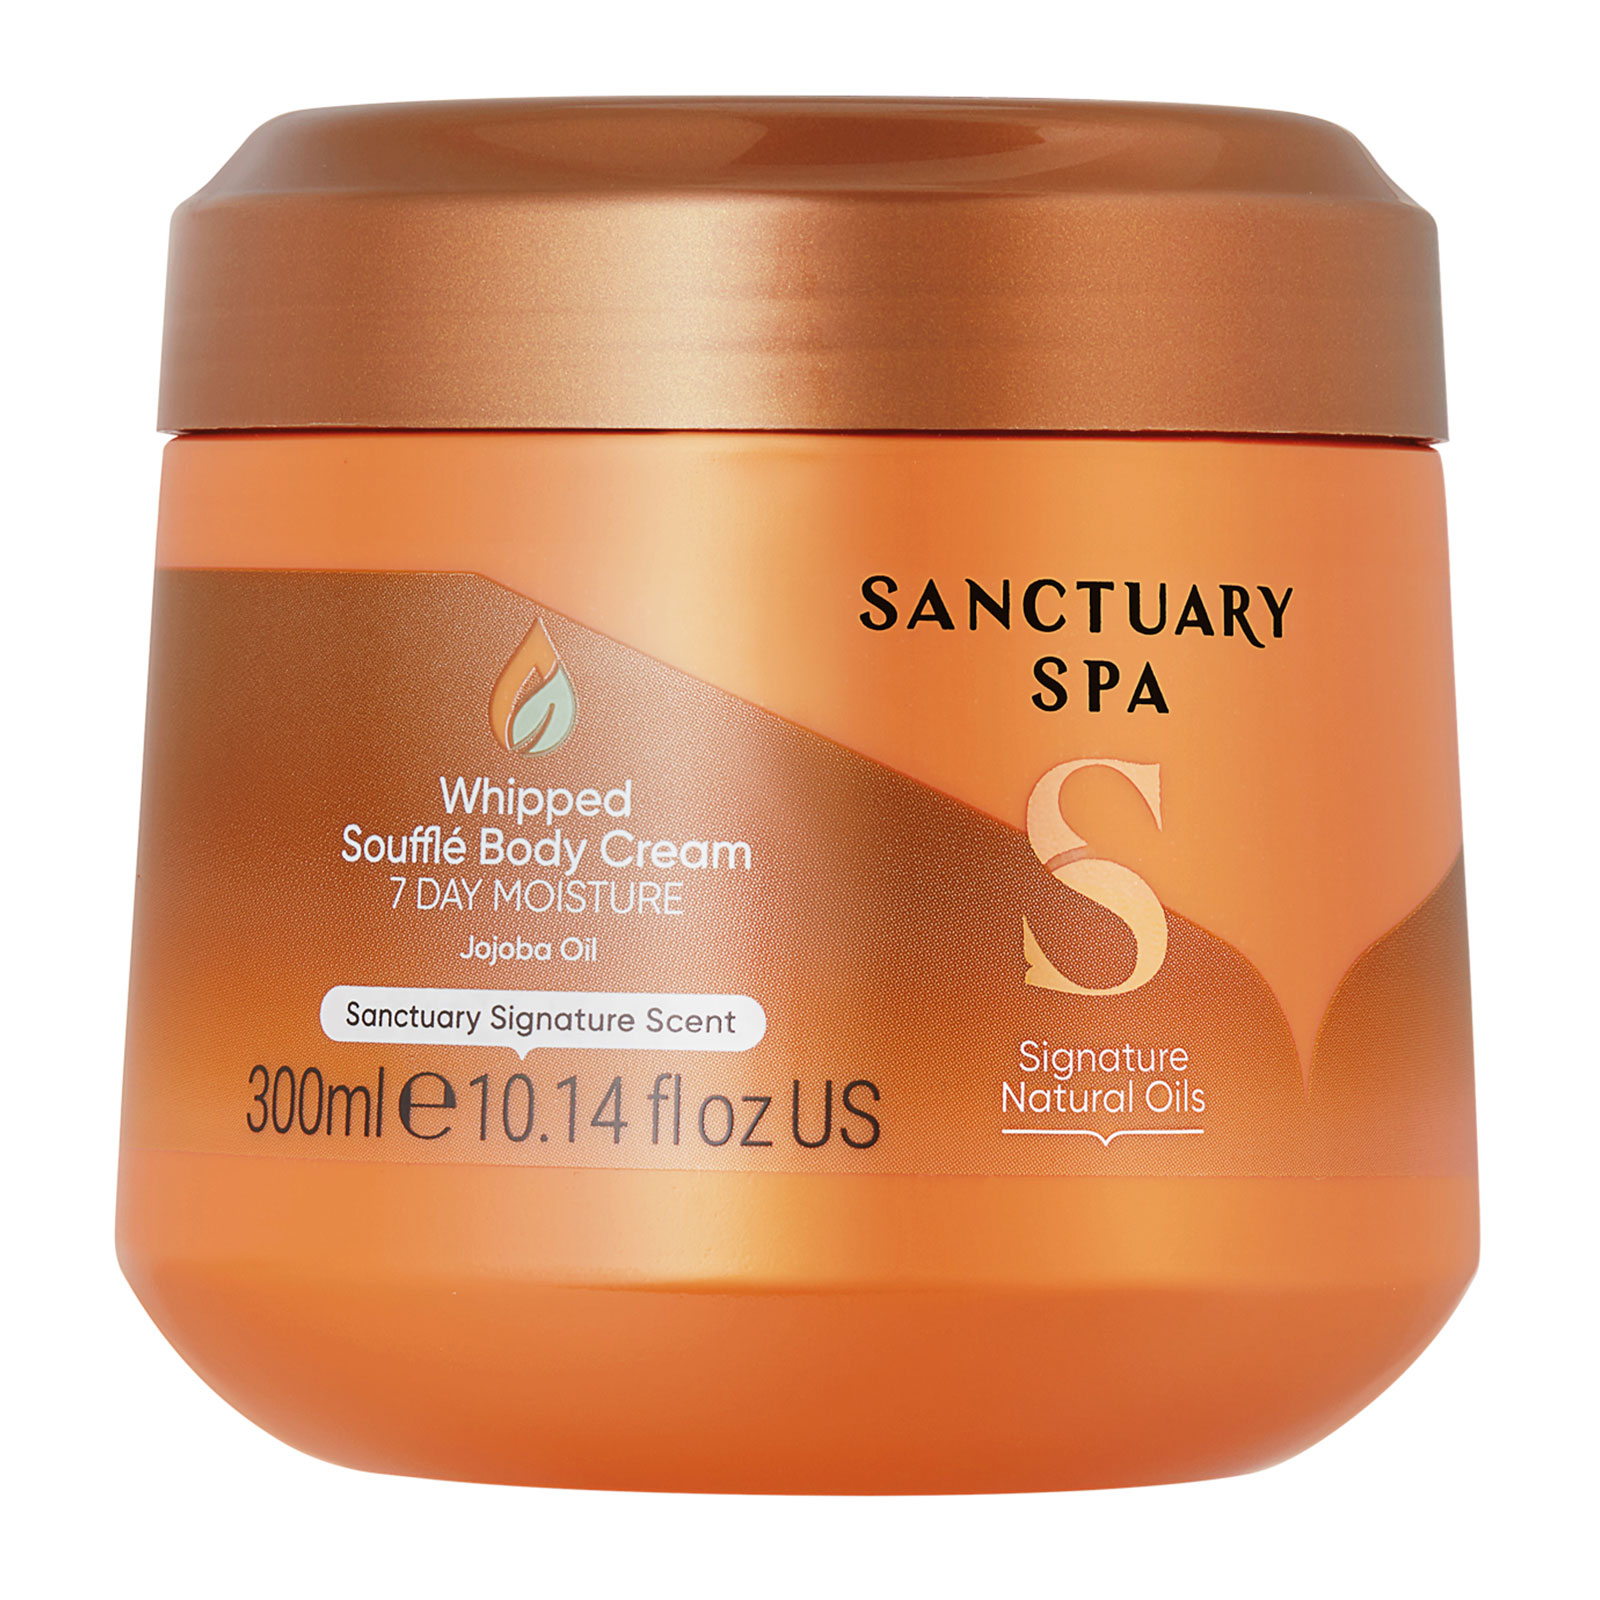 Sanctuary Spa Signature Natural Oils Whipped Souffle Body Cream 300Ml